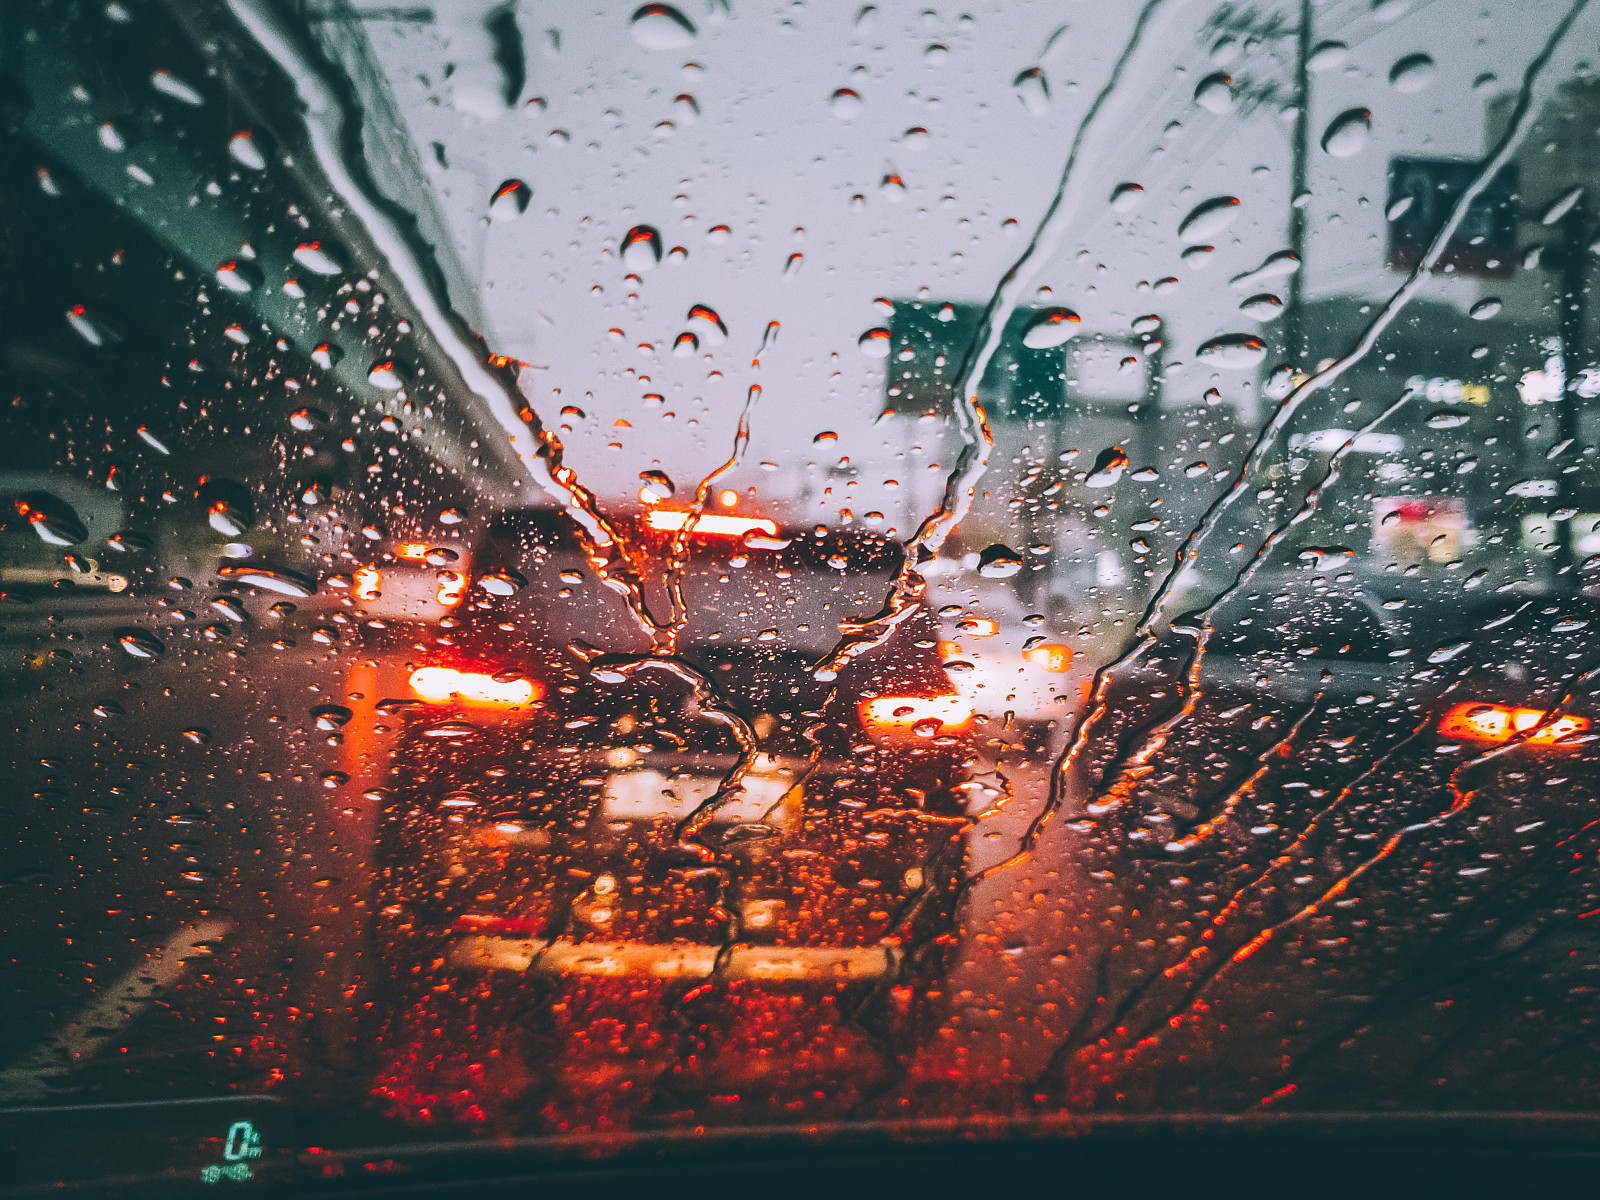 rain-drops-on-vehicle-windshield-1765286.jpg